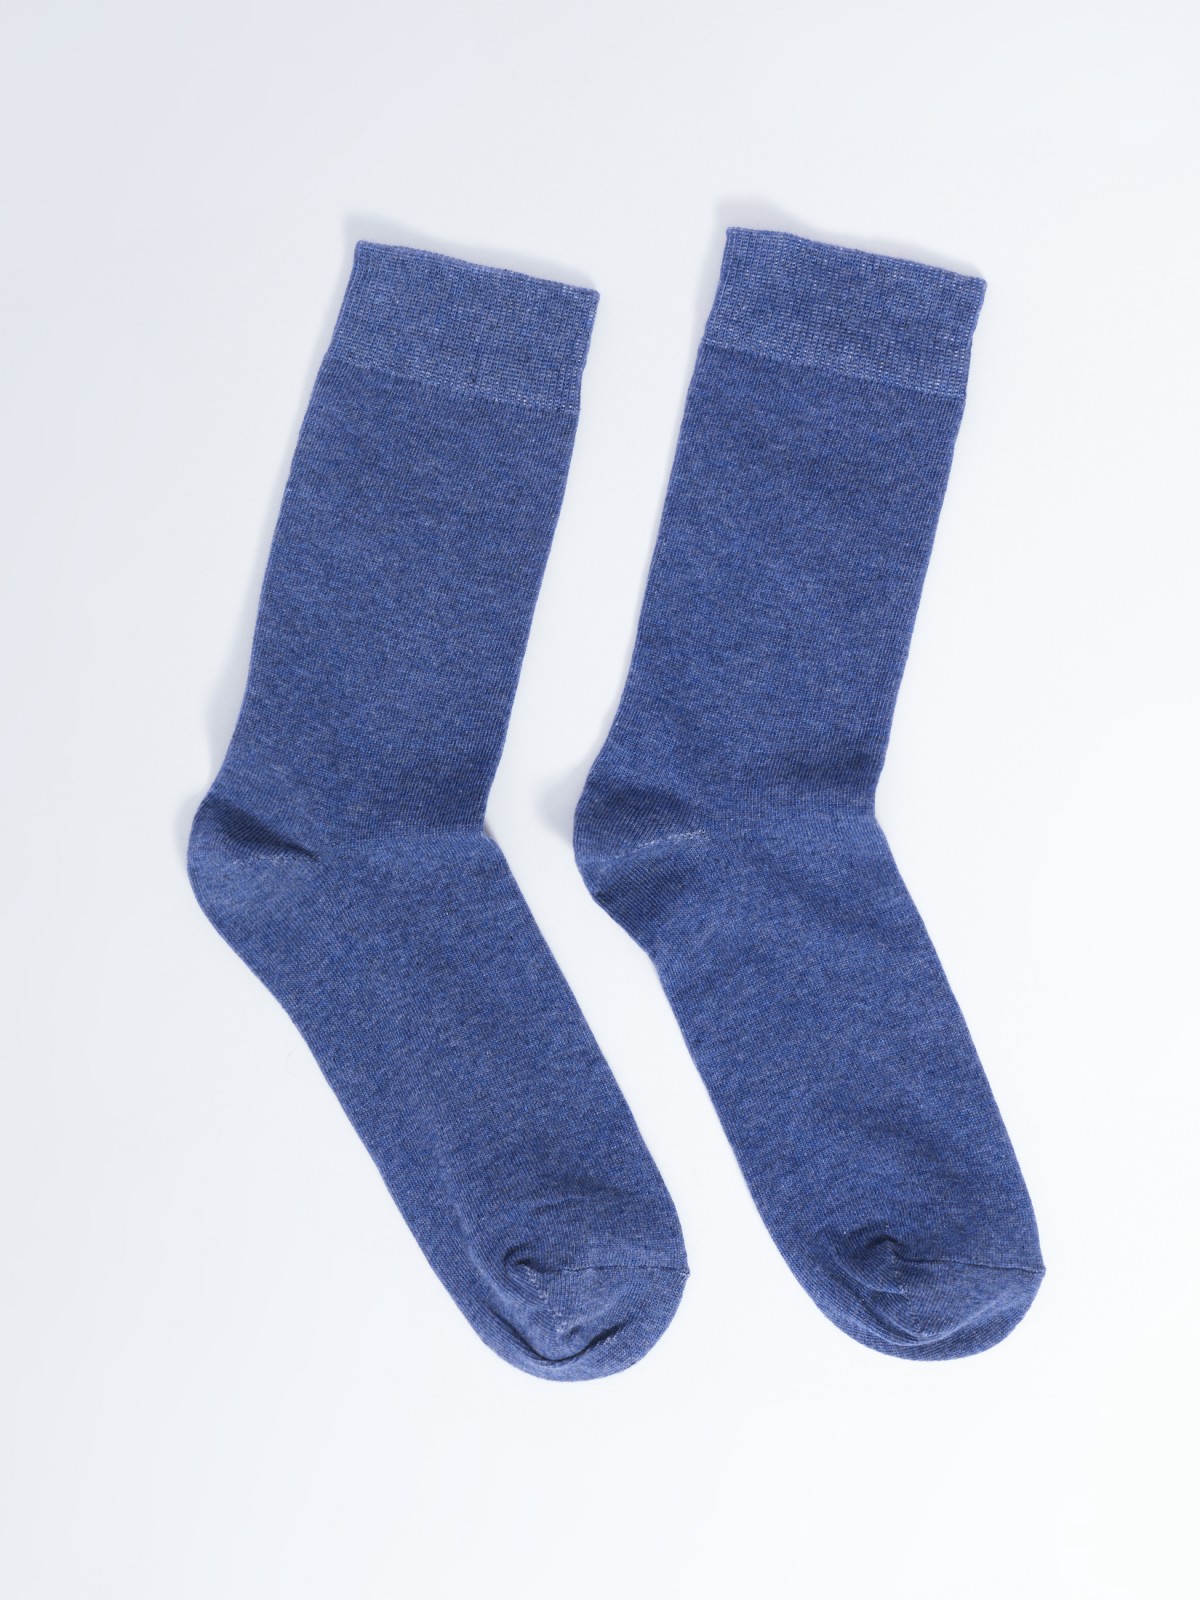 Набор носков (3 пары в комплекте) zolla 01331990Z025, цвет темно-синий, размер 25-27 - фото 4